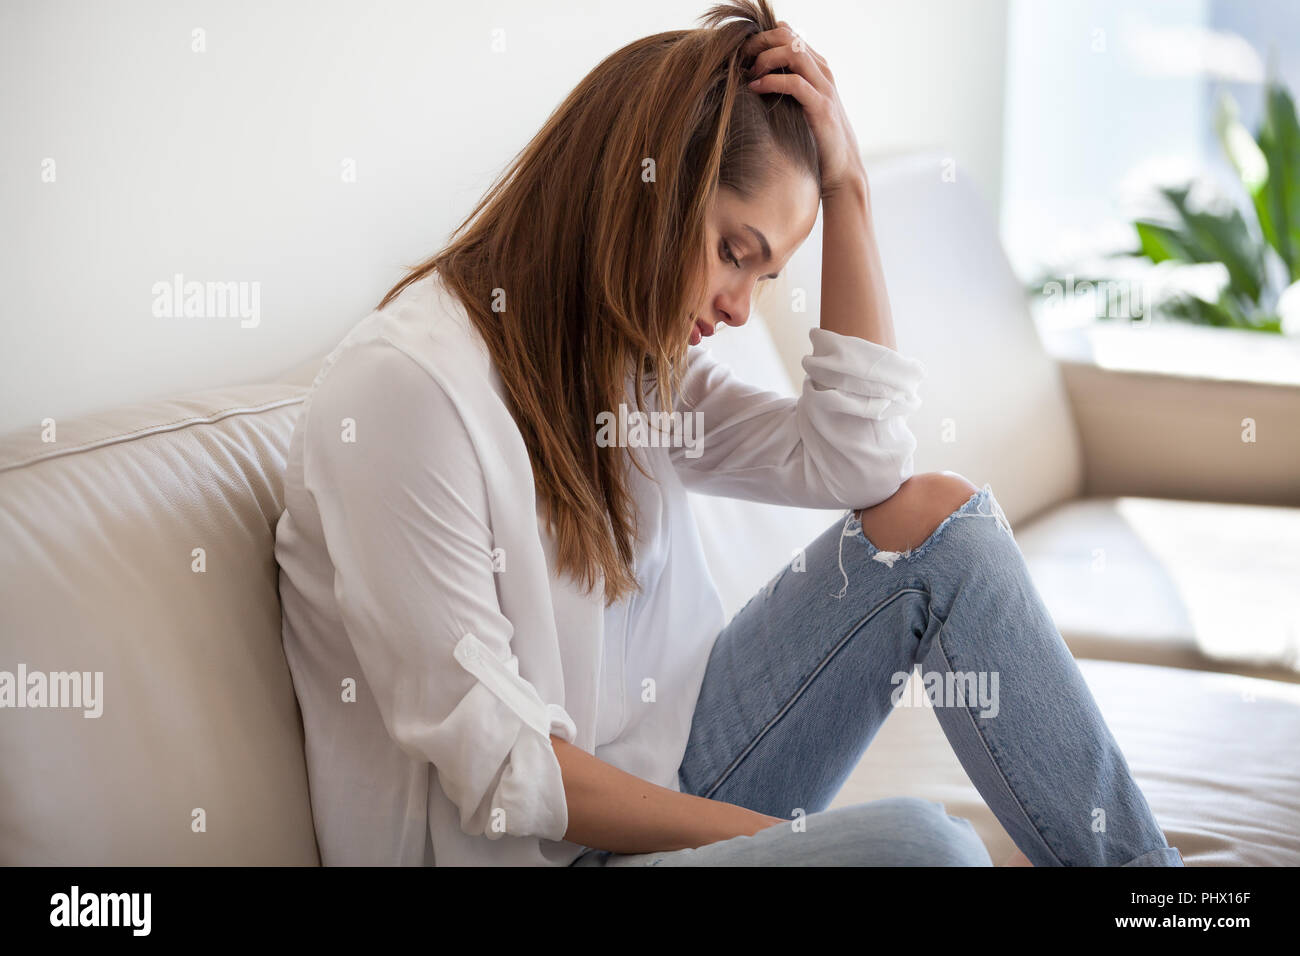 Sad depressed woman feeling bad at home sitting on sofa Stock Photo